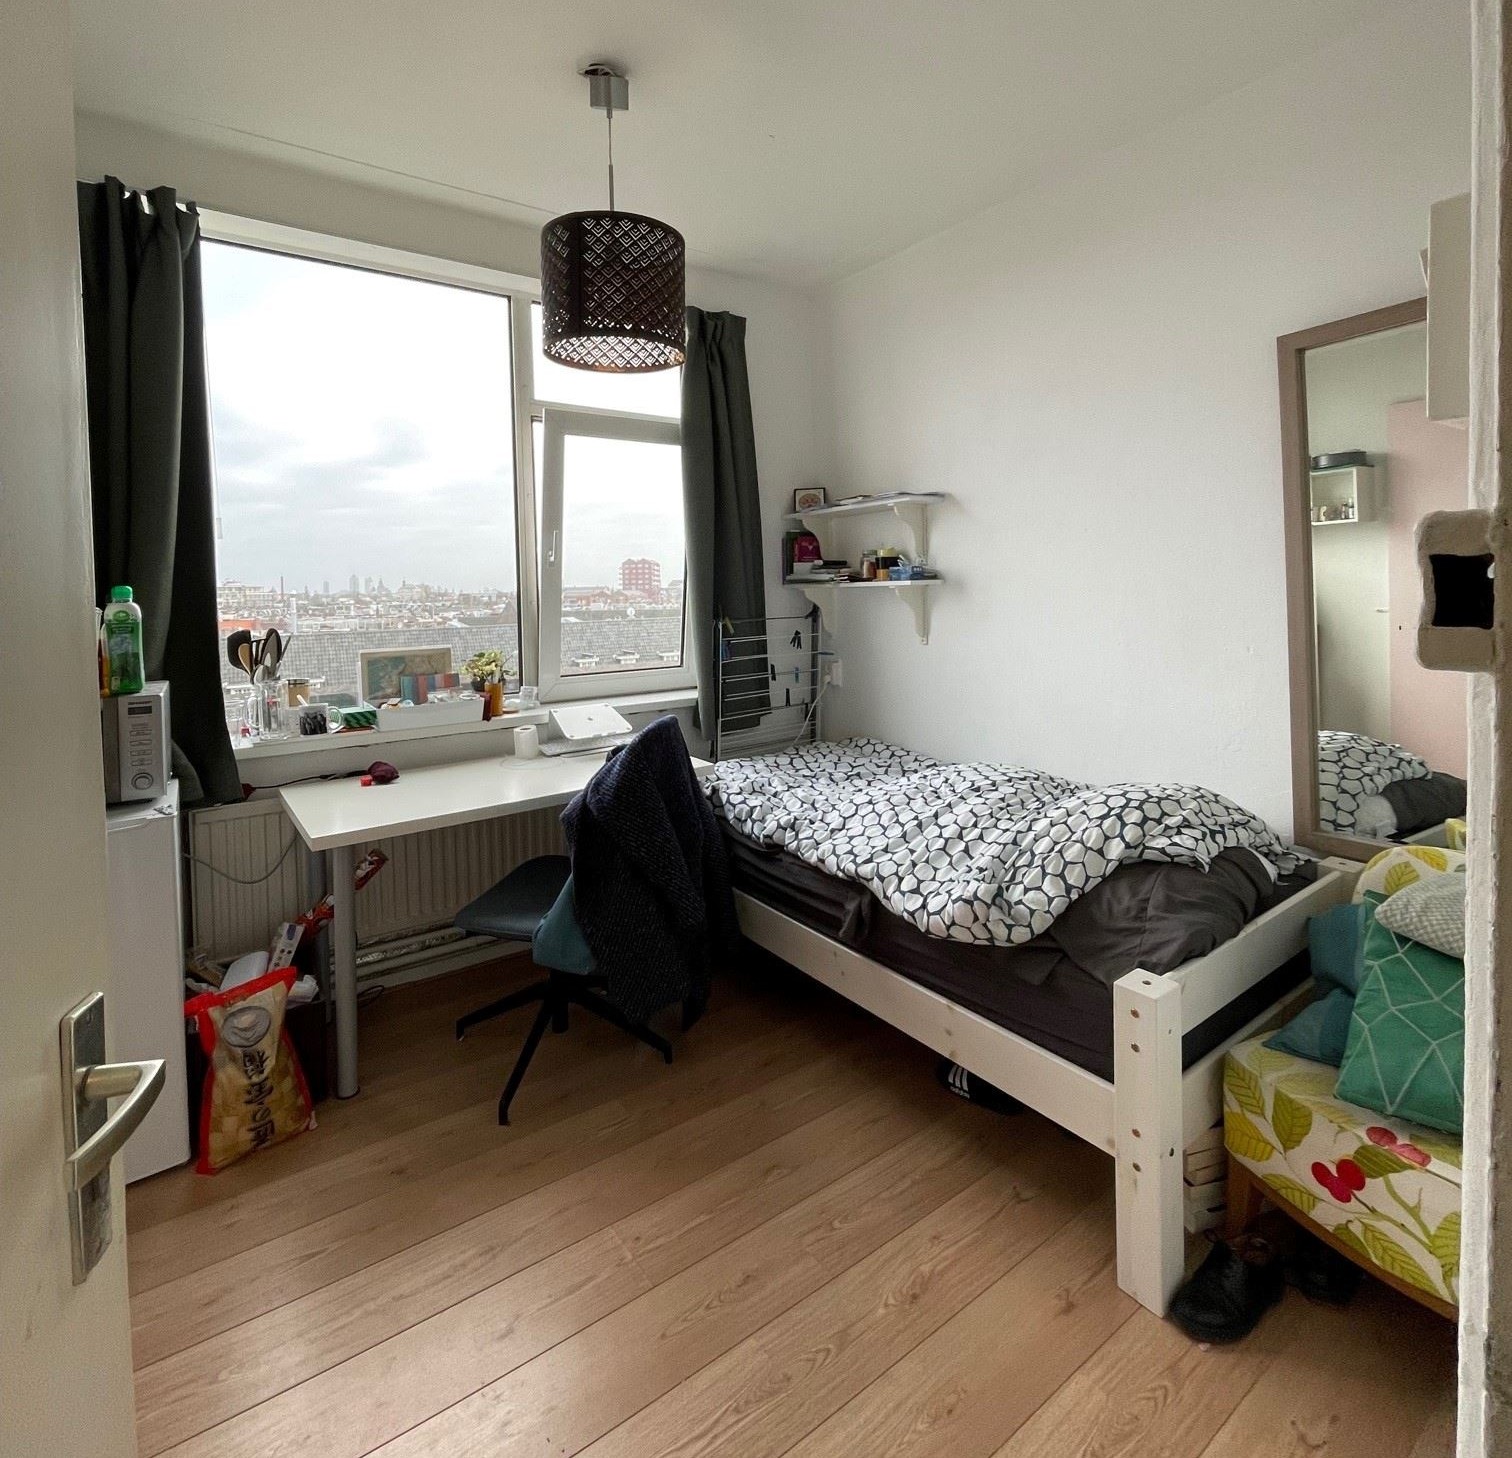 combinatie kool Manifestatie Amsterdamse mini-kamer staat voor €100.000 te koop op Funda